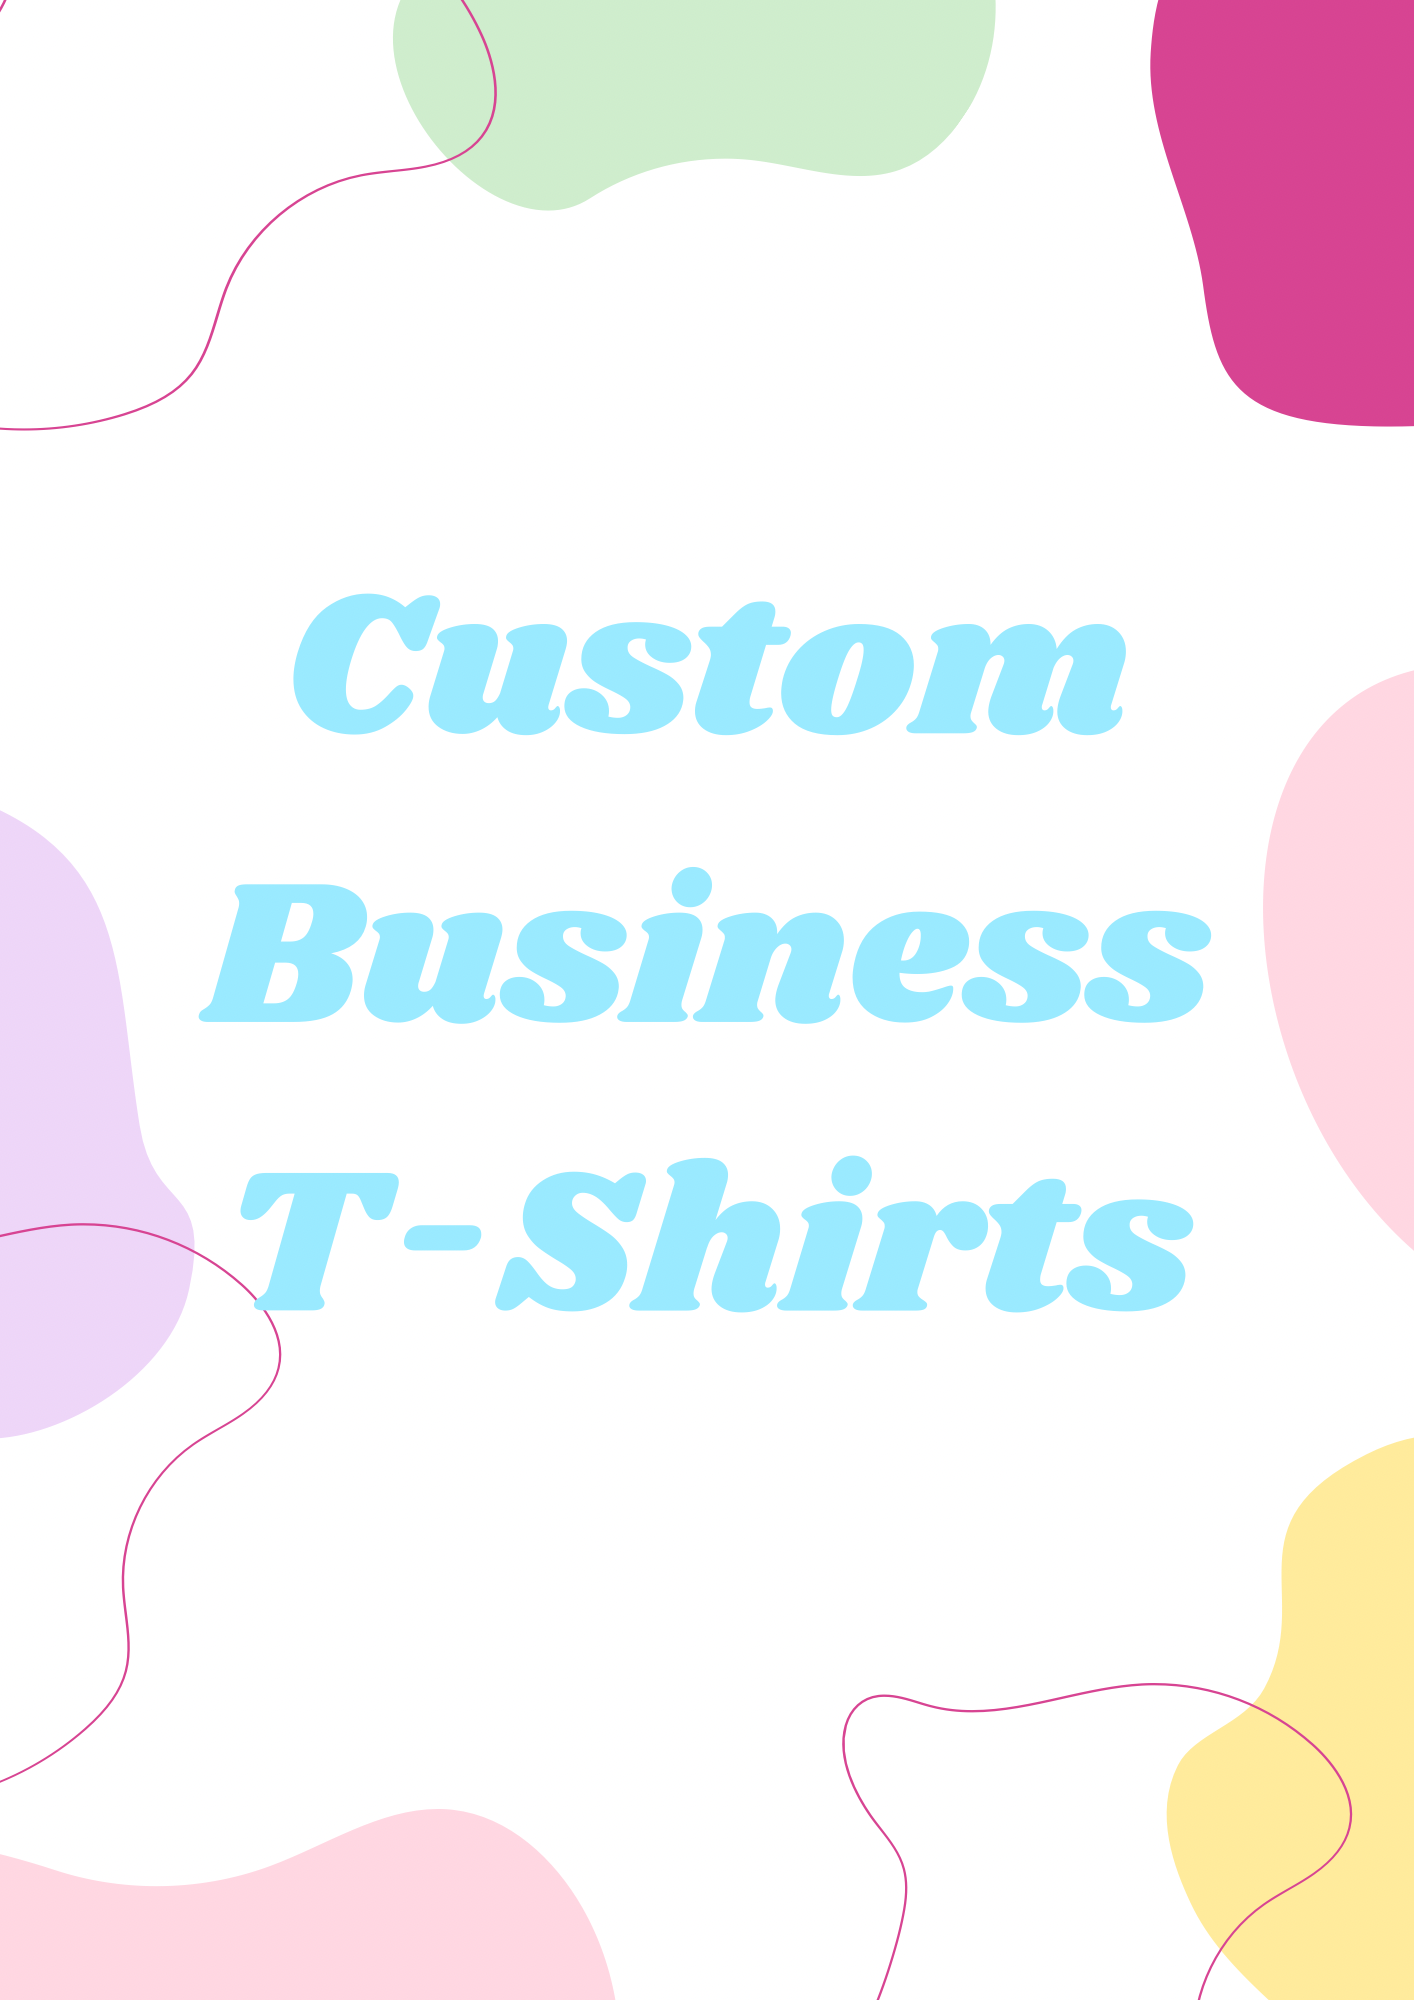 Business t-shirts